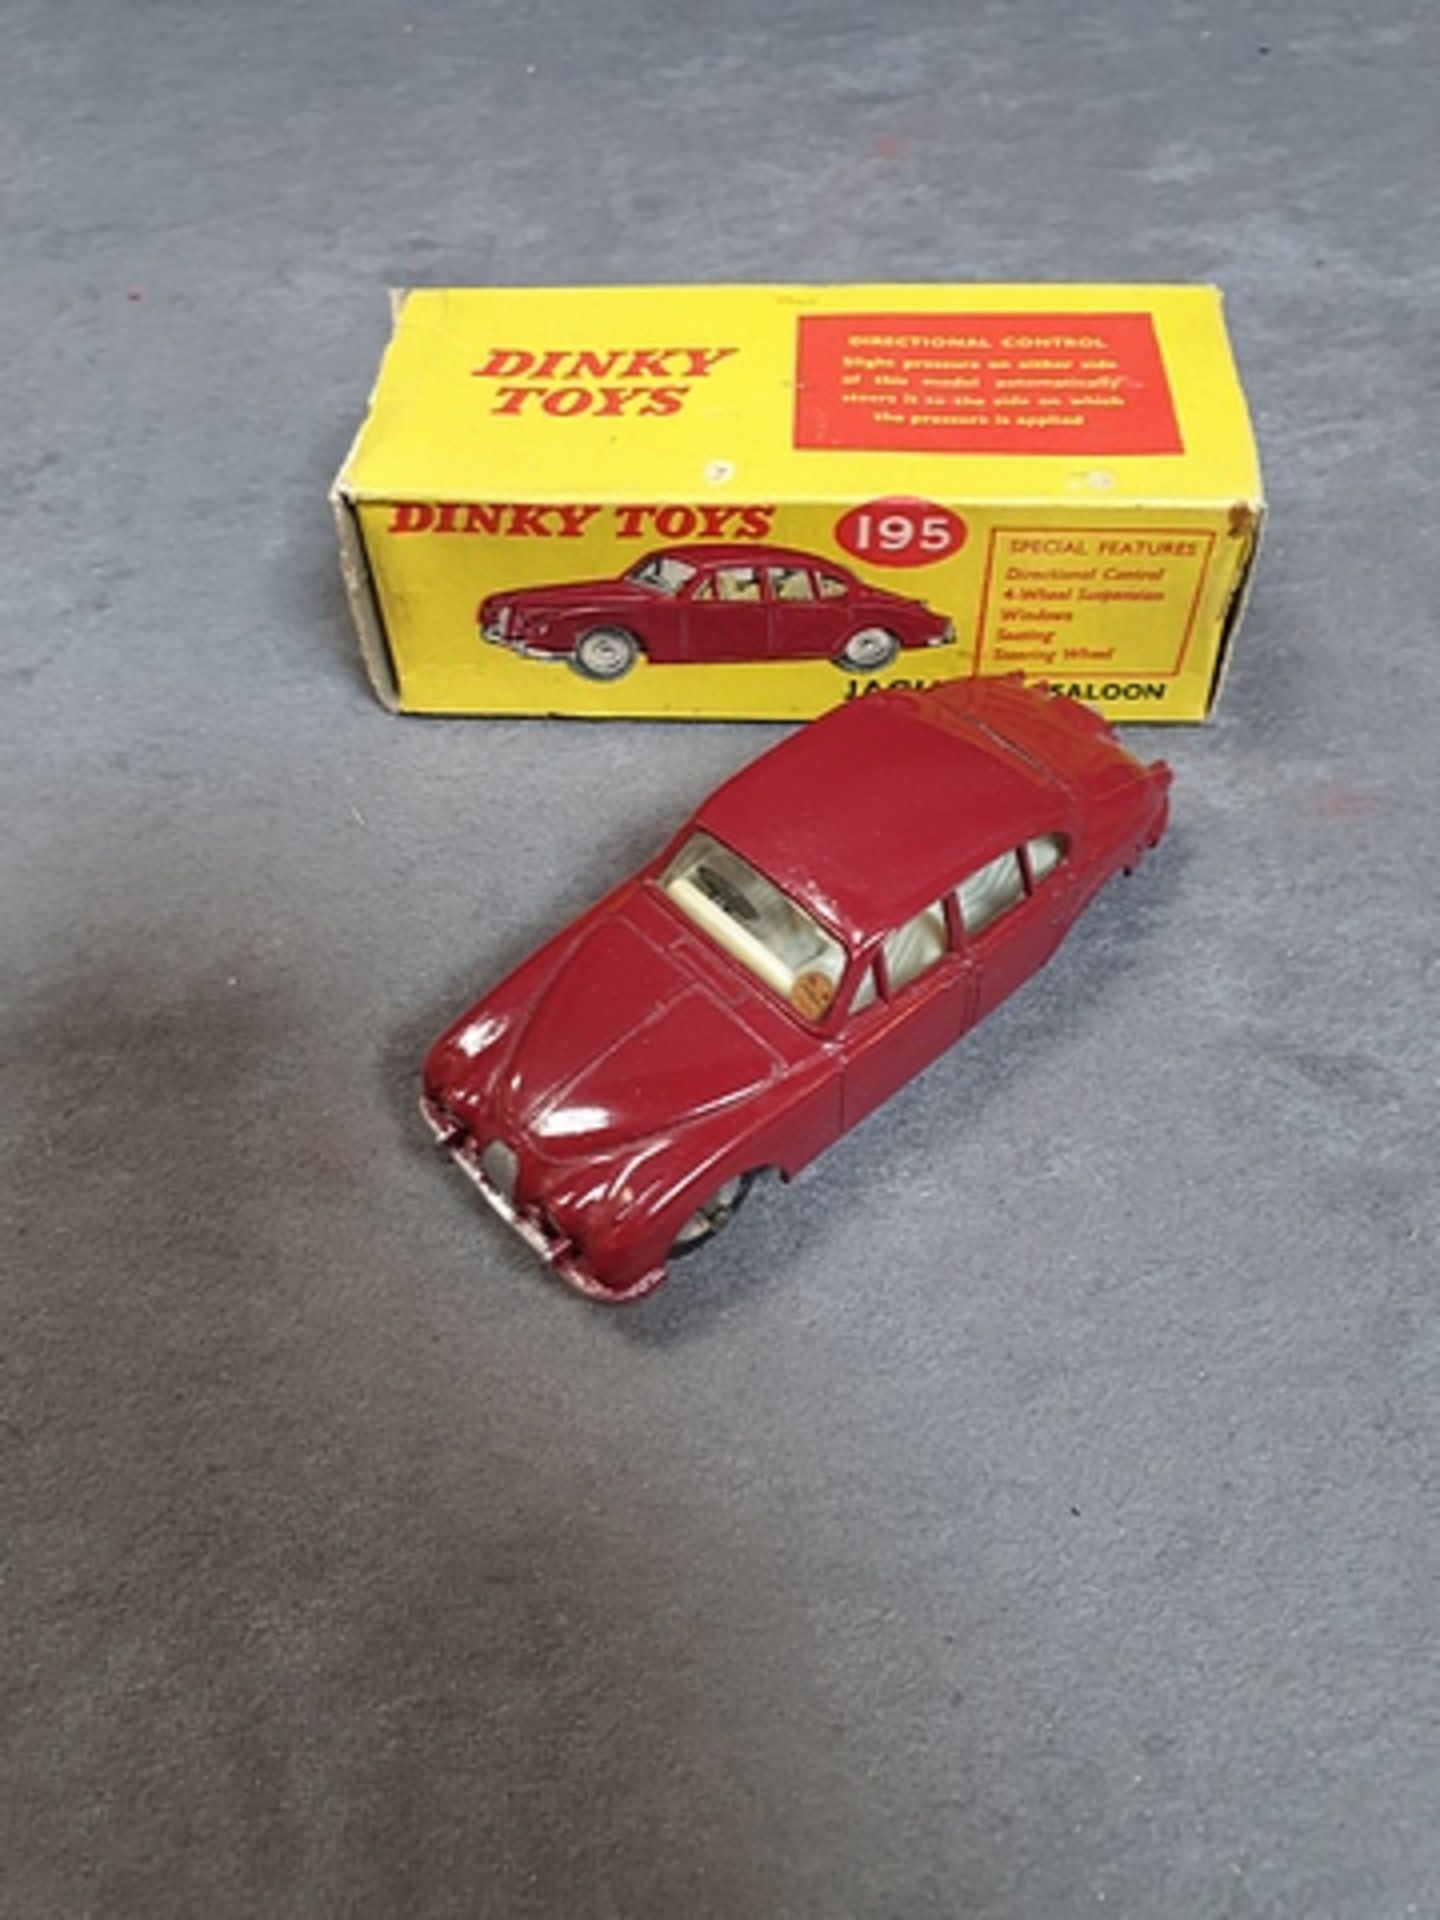 Dinky Diecast Toys #195 Jaguar 34 Saloon Complete In Original Box - Image 2 of 2